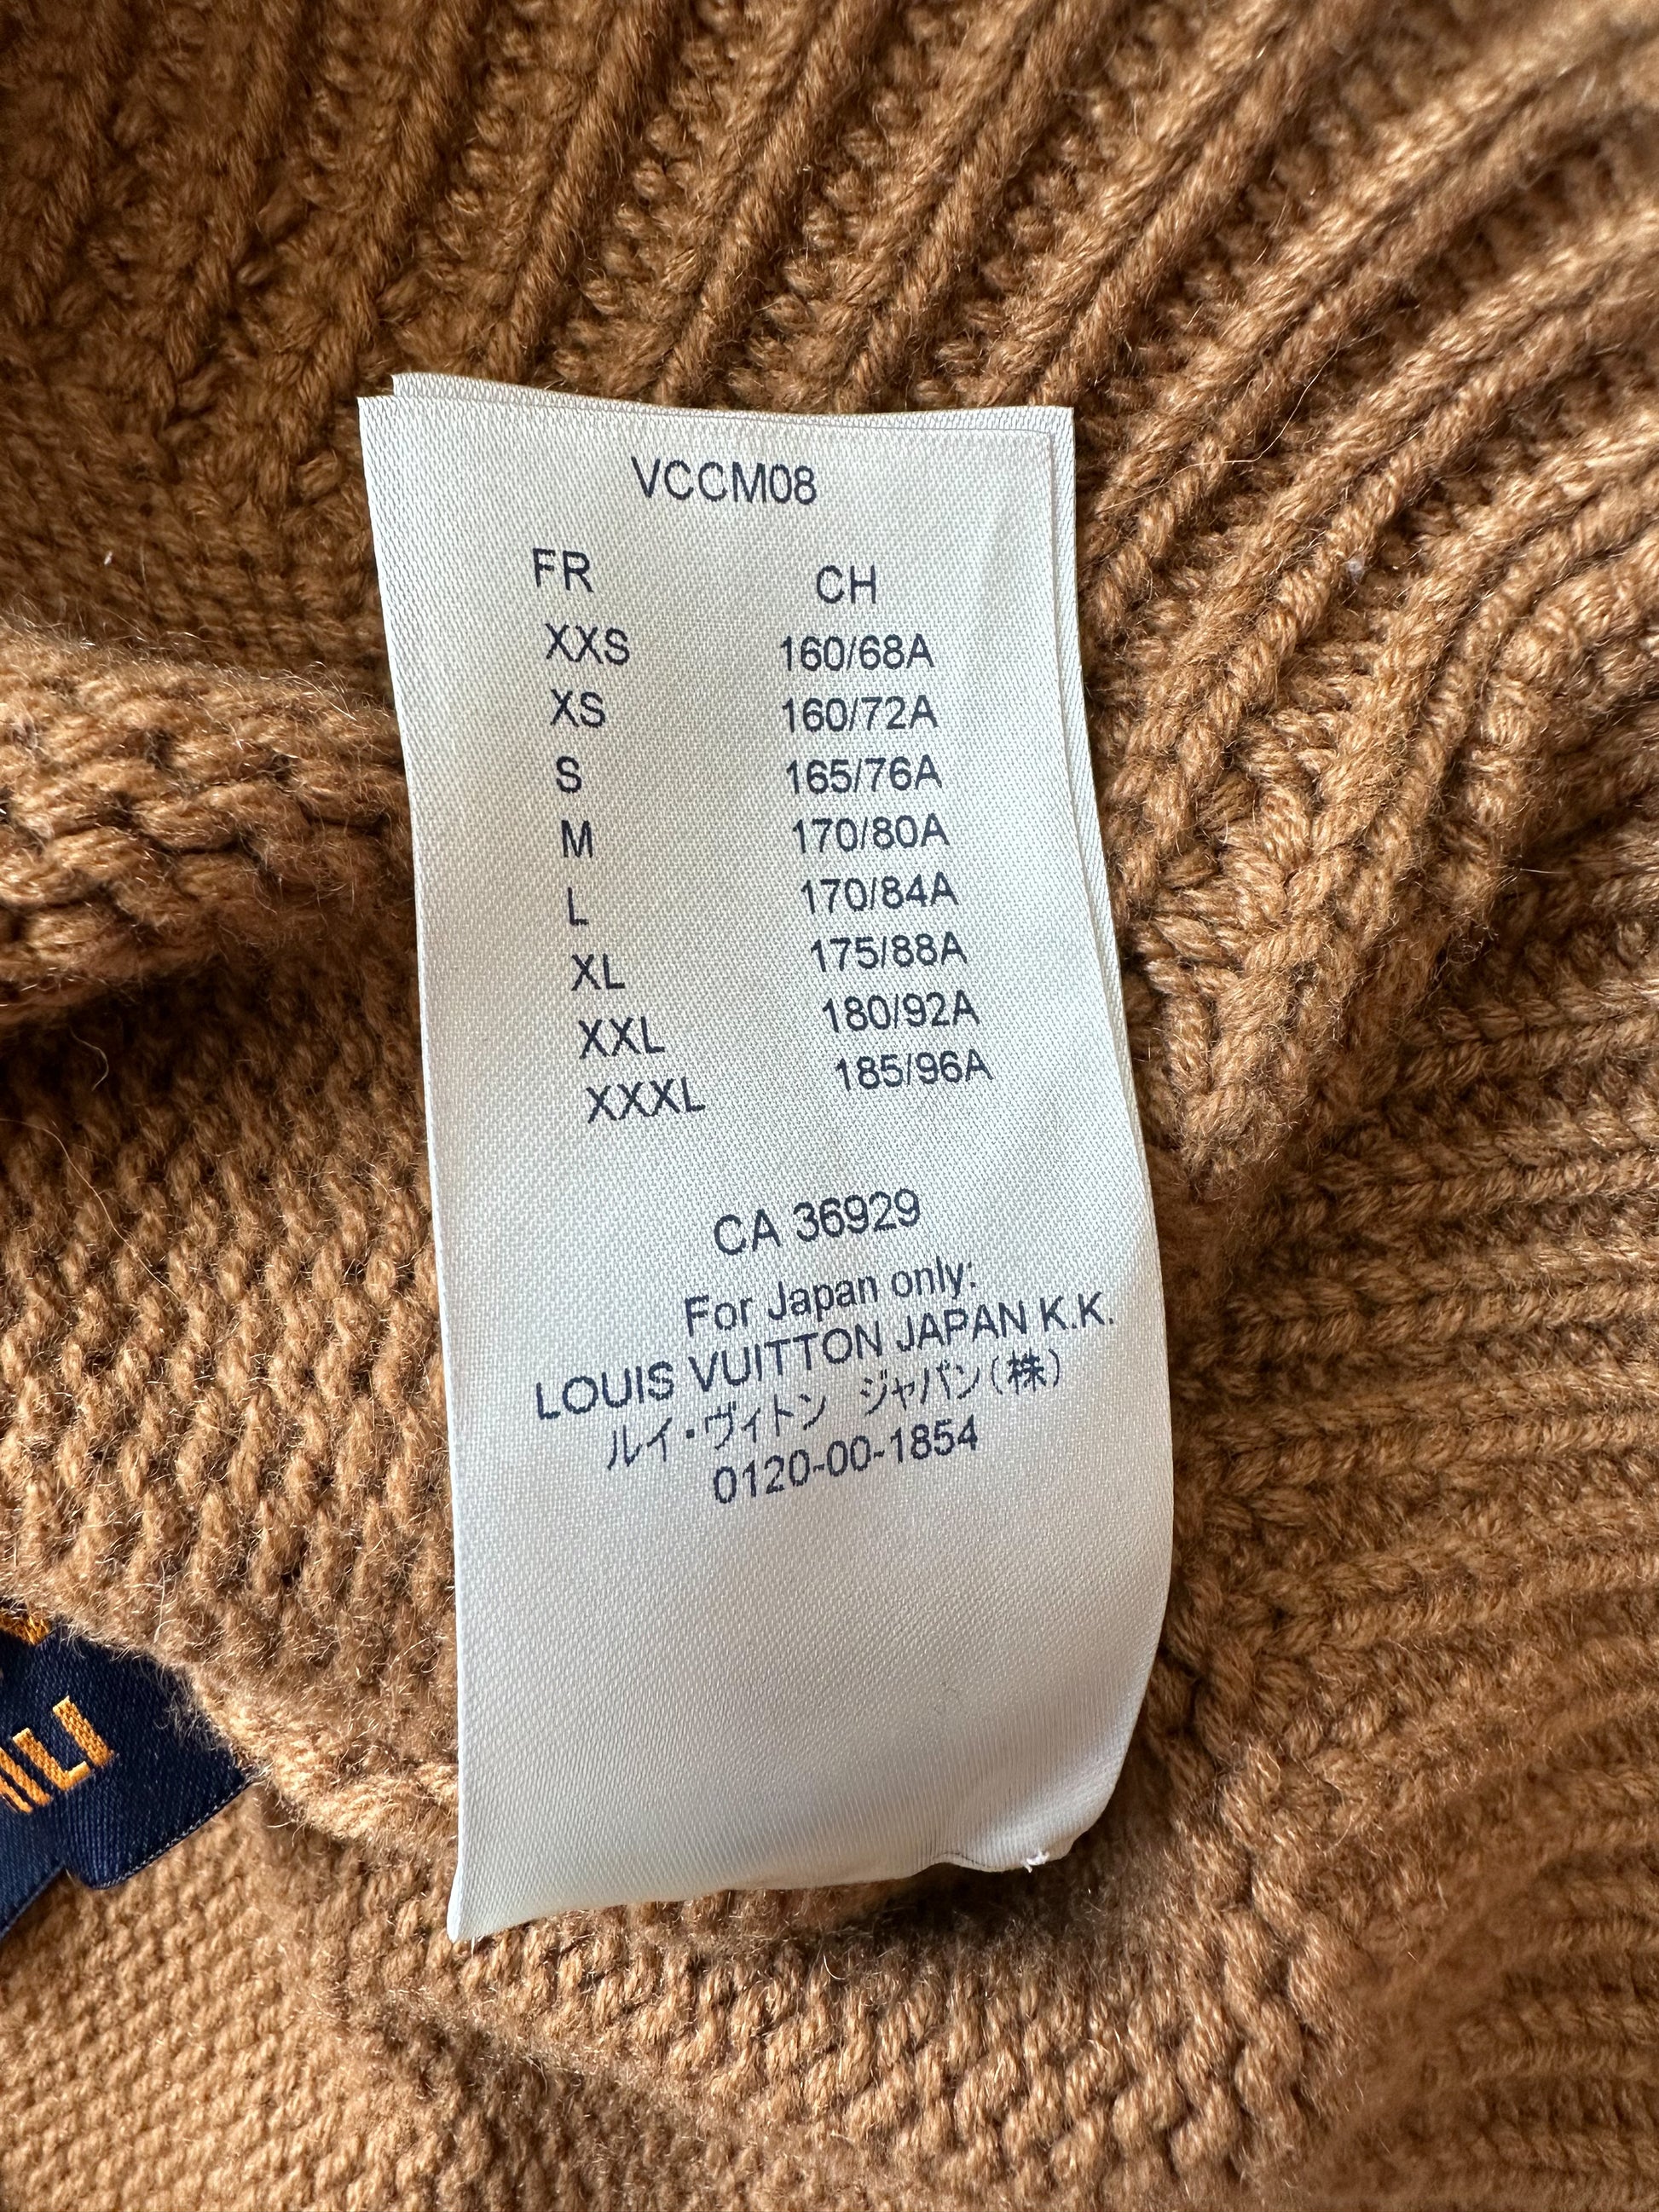 Louis Vuitton Brown Peace & Love Cashmere Sweater